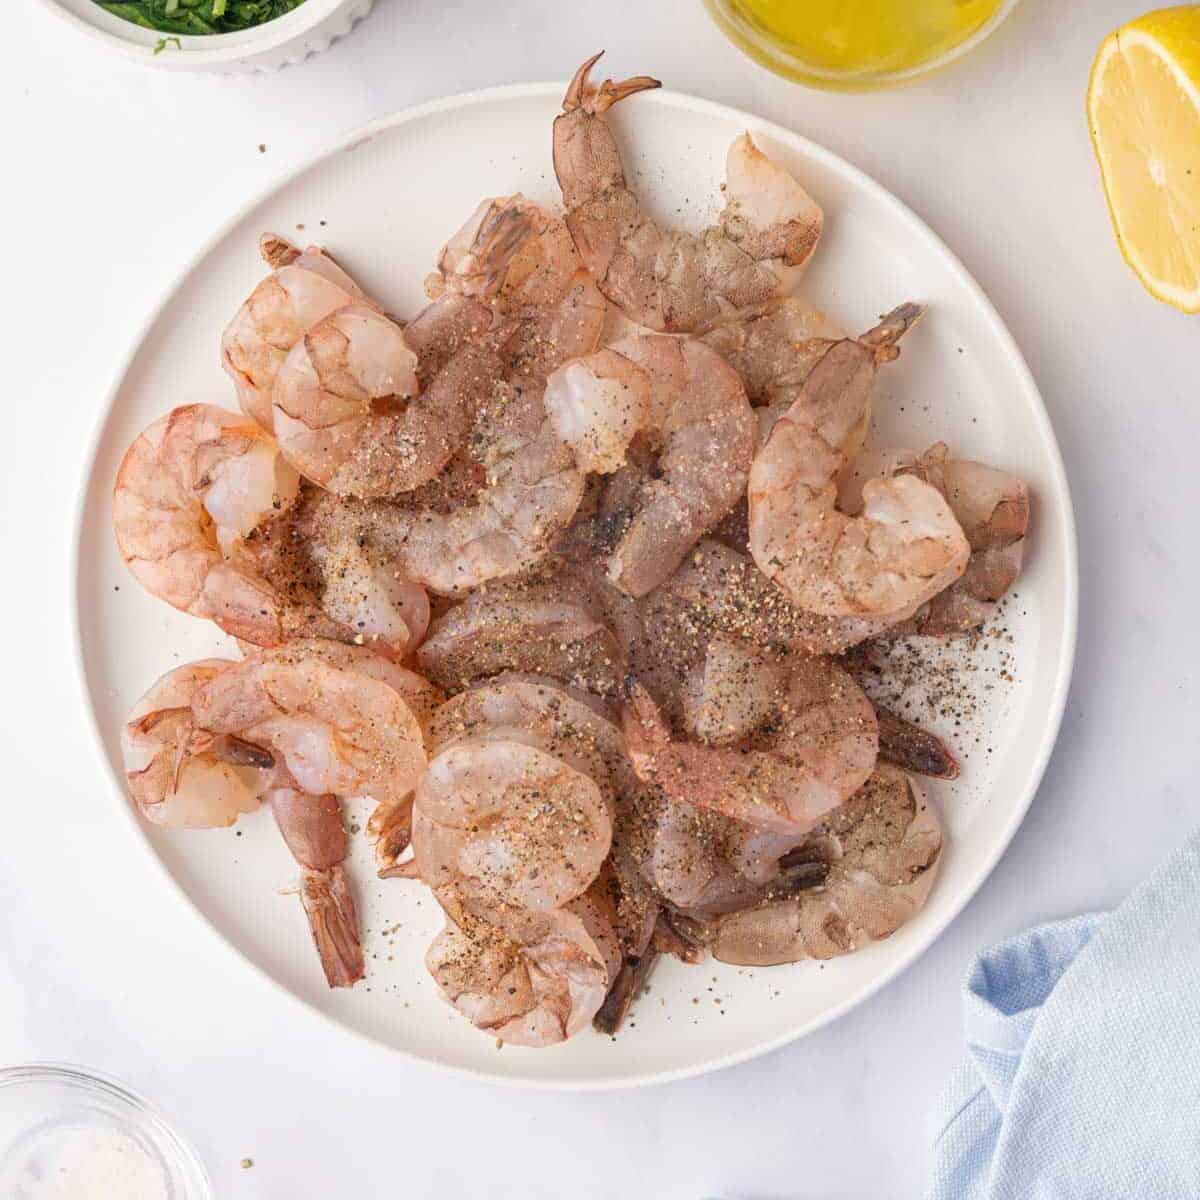 Raw shrimp seasoned with salt and pepper.